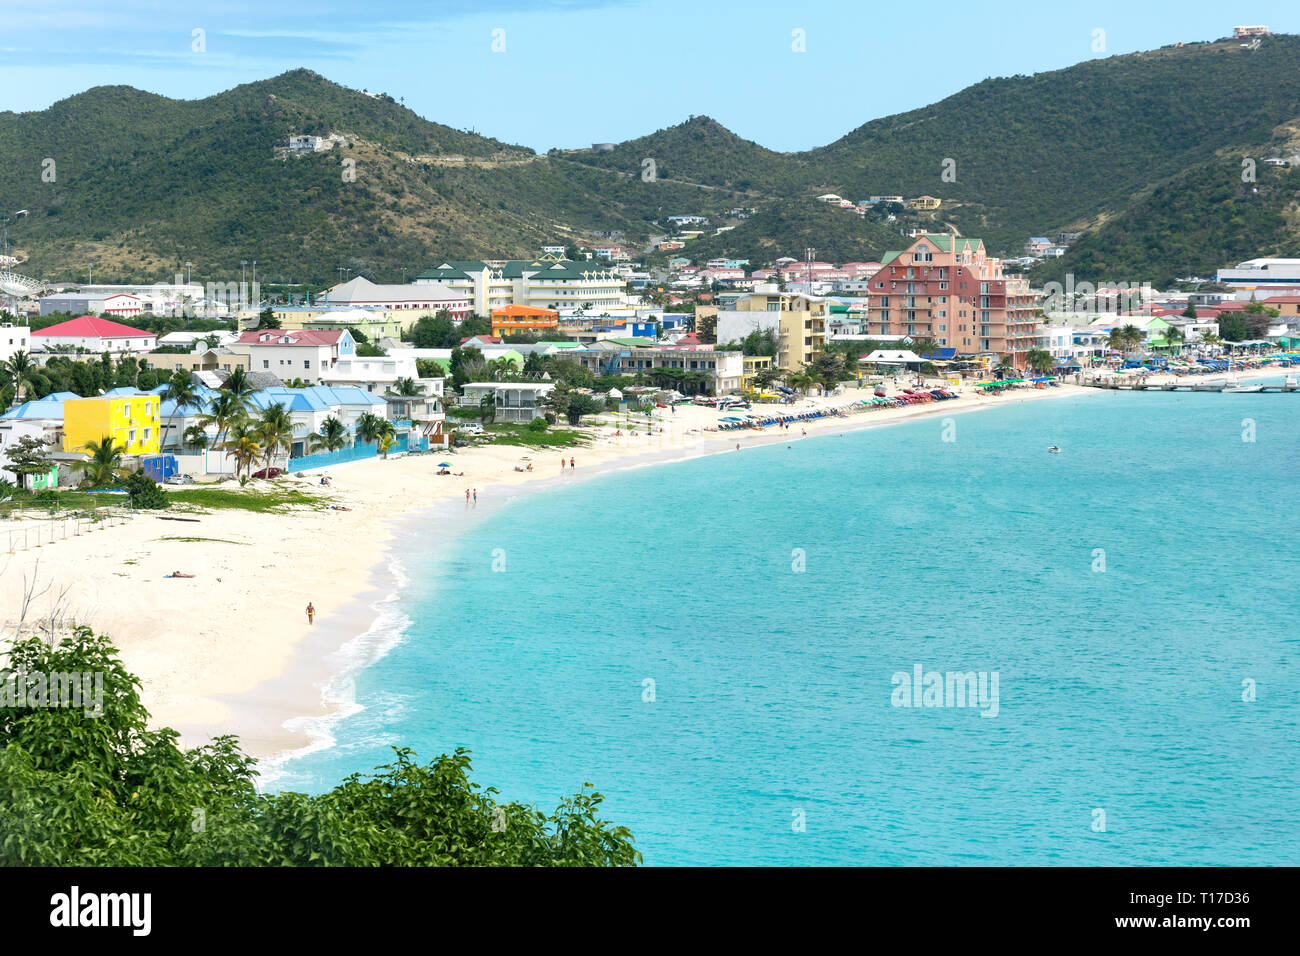 Aerial view of town and beach, Philipsburg, St Maarten, Saint Martin, Lesser Antilles, Caribbean Stock Photo